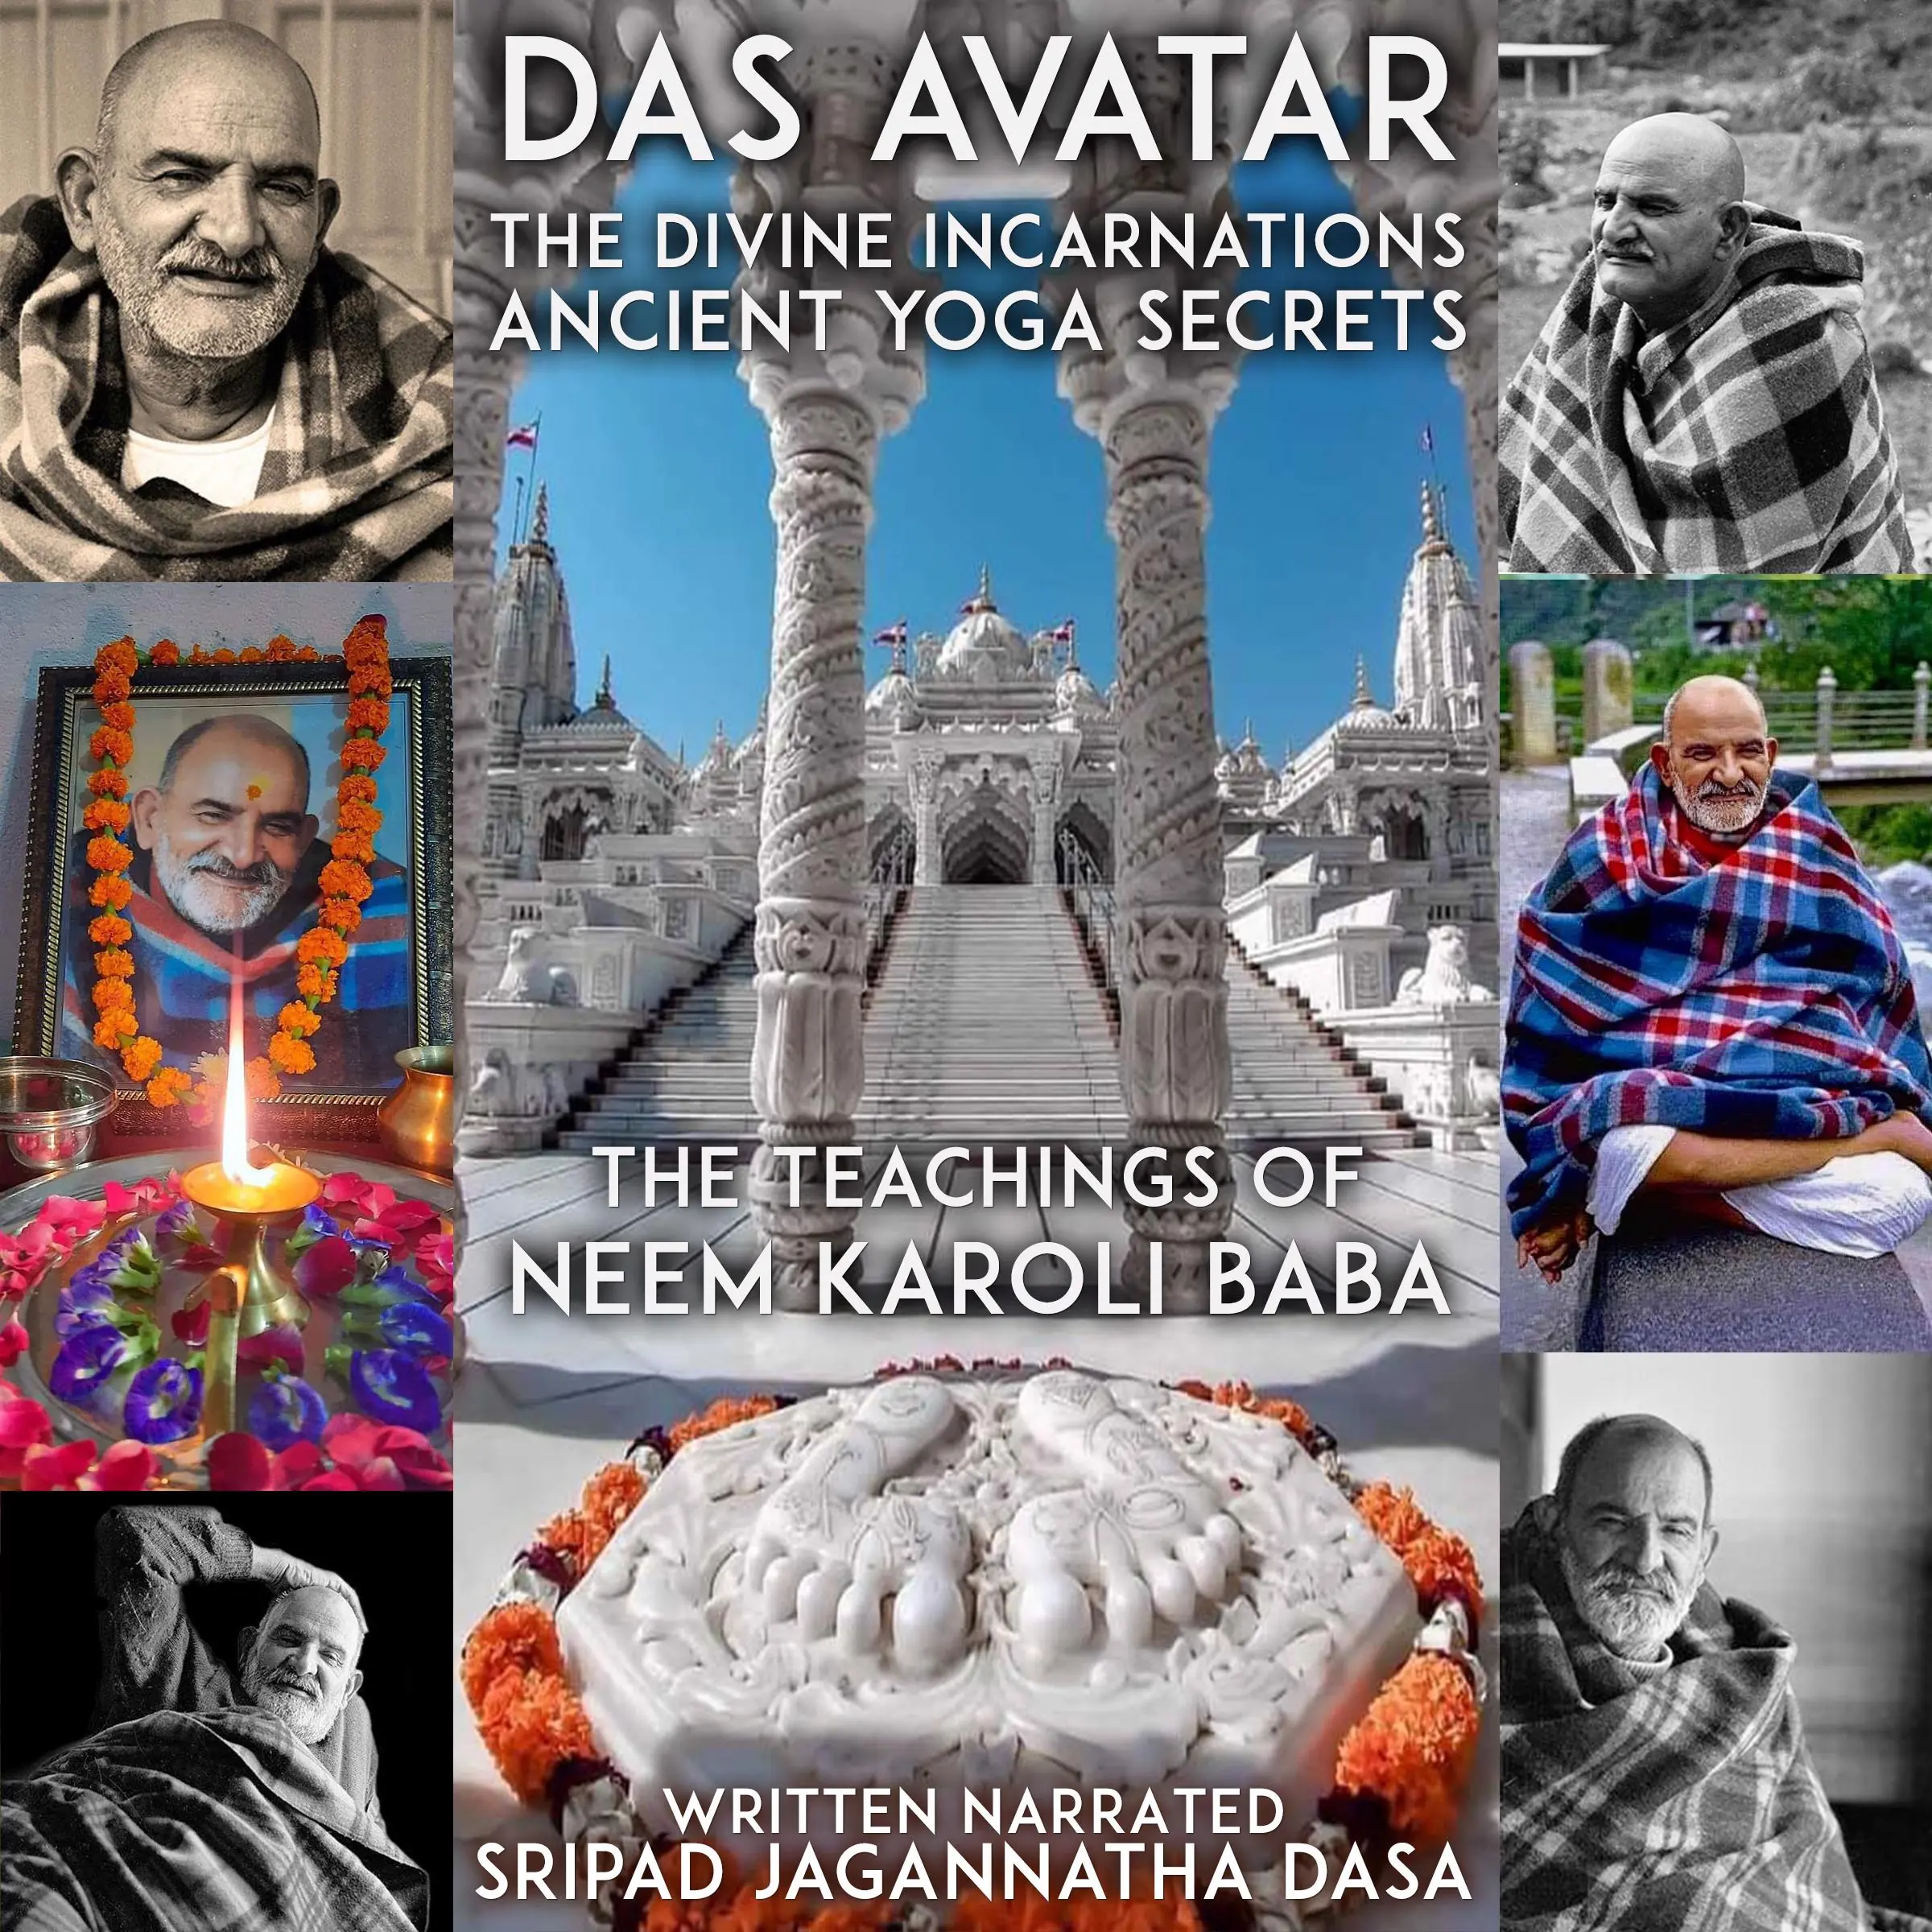 Das Avatar The Divine Incarnations Anient Yoga Secrets - The Teachings Of Neem Karoli Baba Audiobook by Sripad Jagannatha Dasa